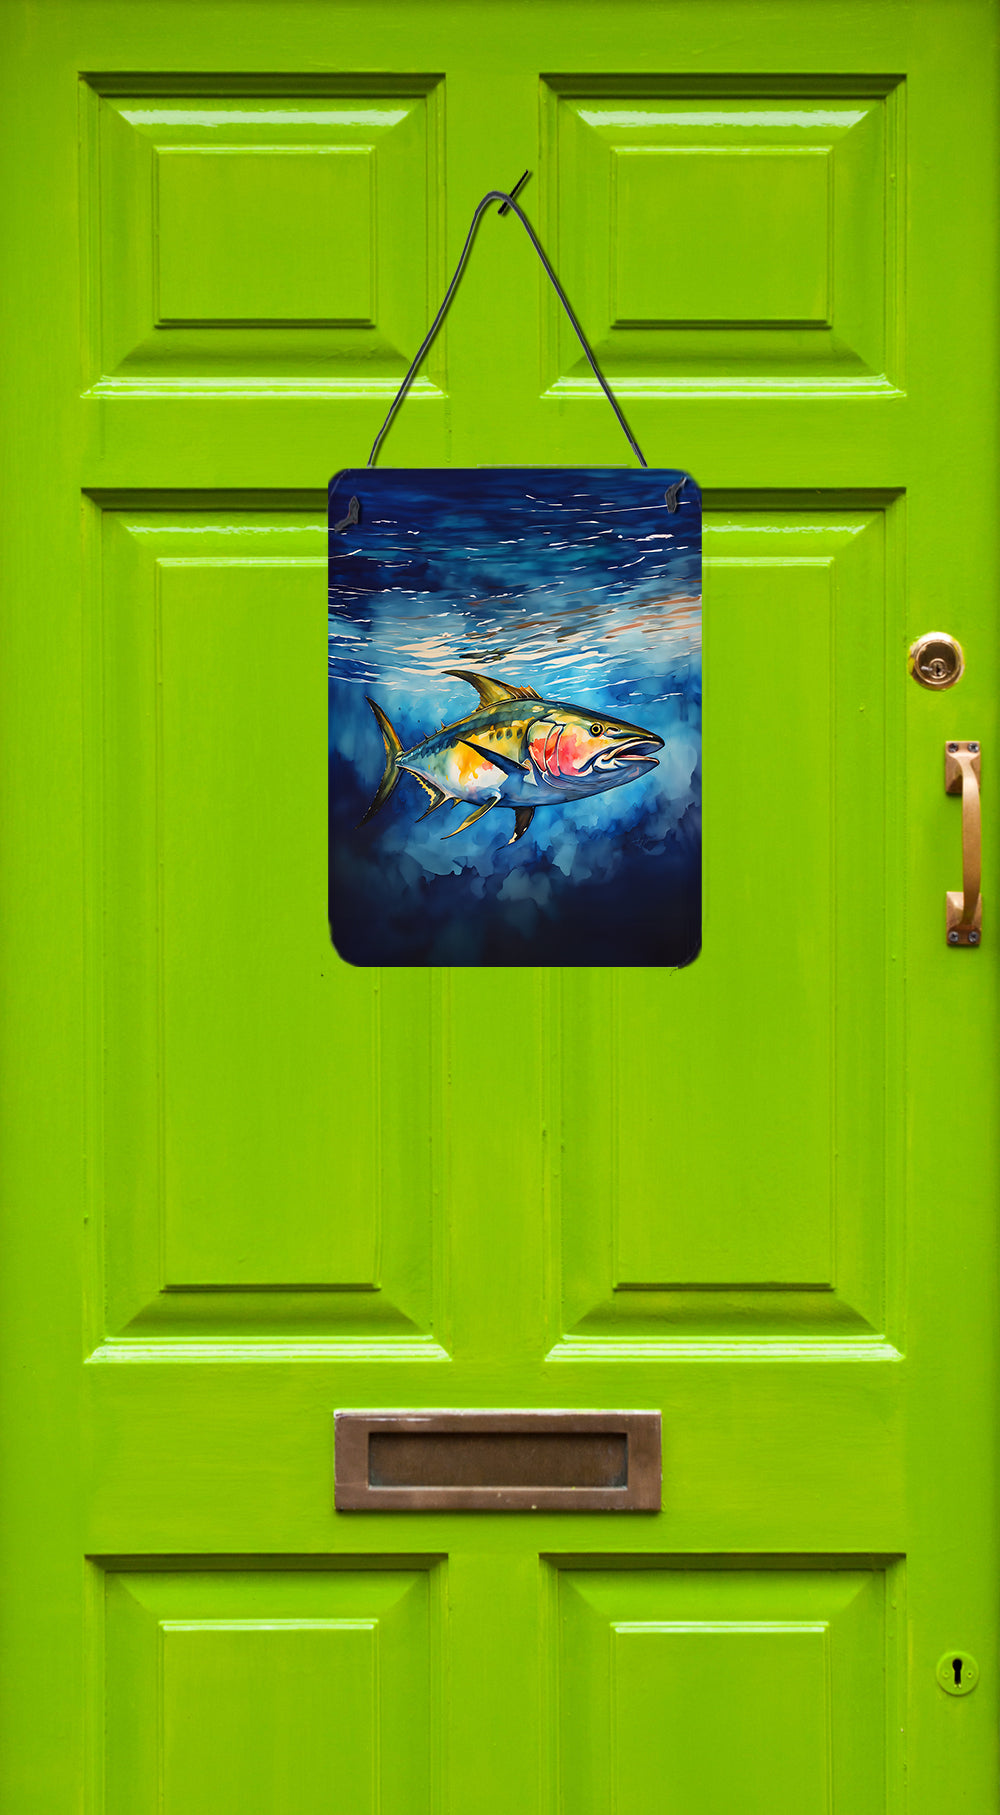 Buy this Yellowfin Tuna Wall or Door Hanging Prints